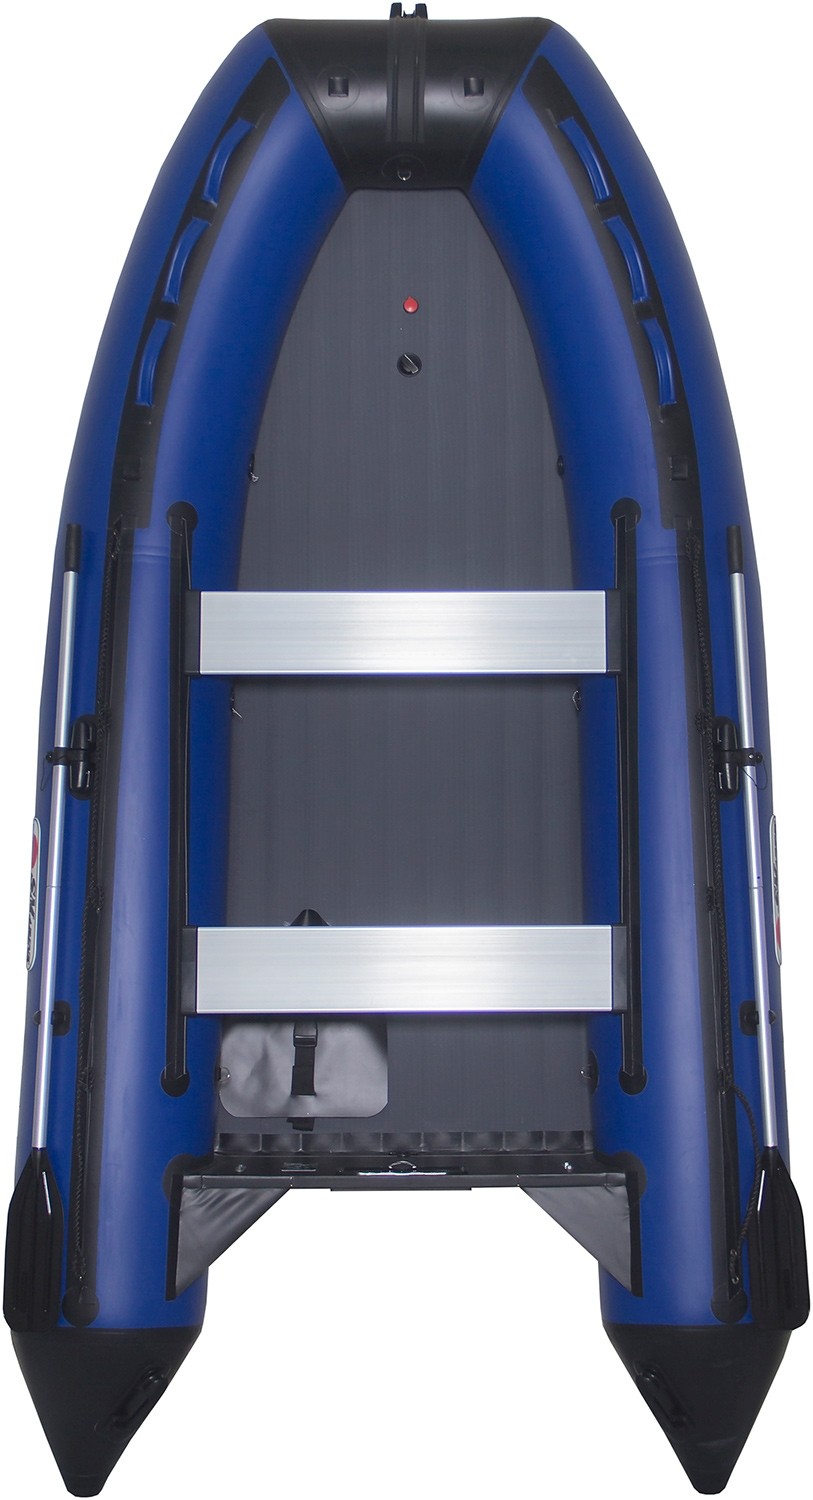 Лодка SMarine AIR MAX - 360 (светло-синий/черный)